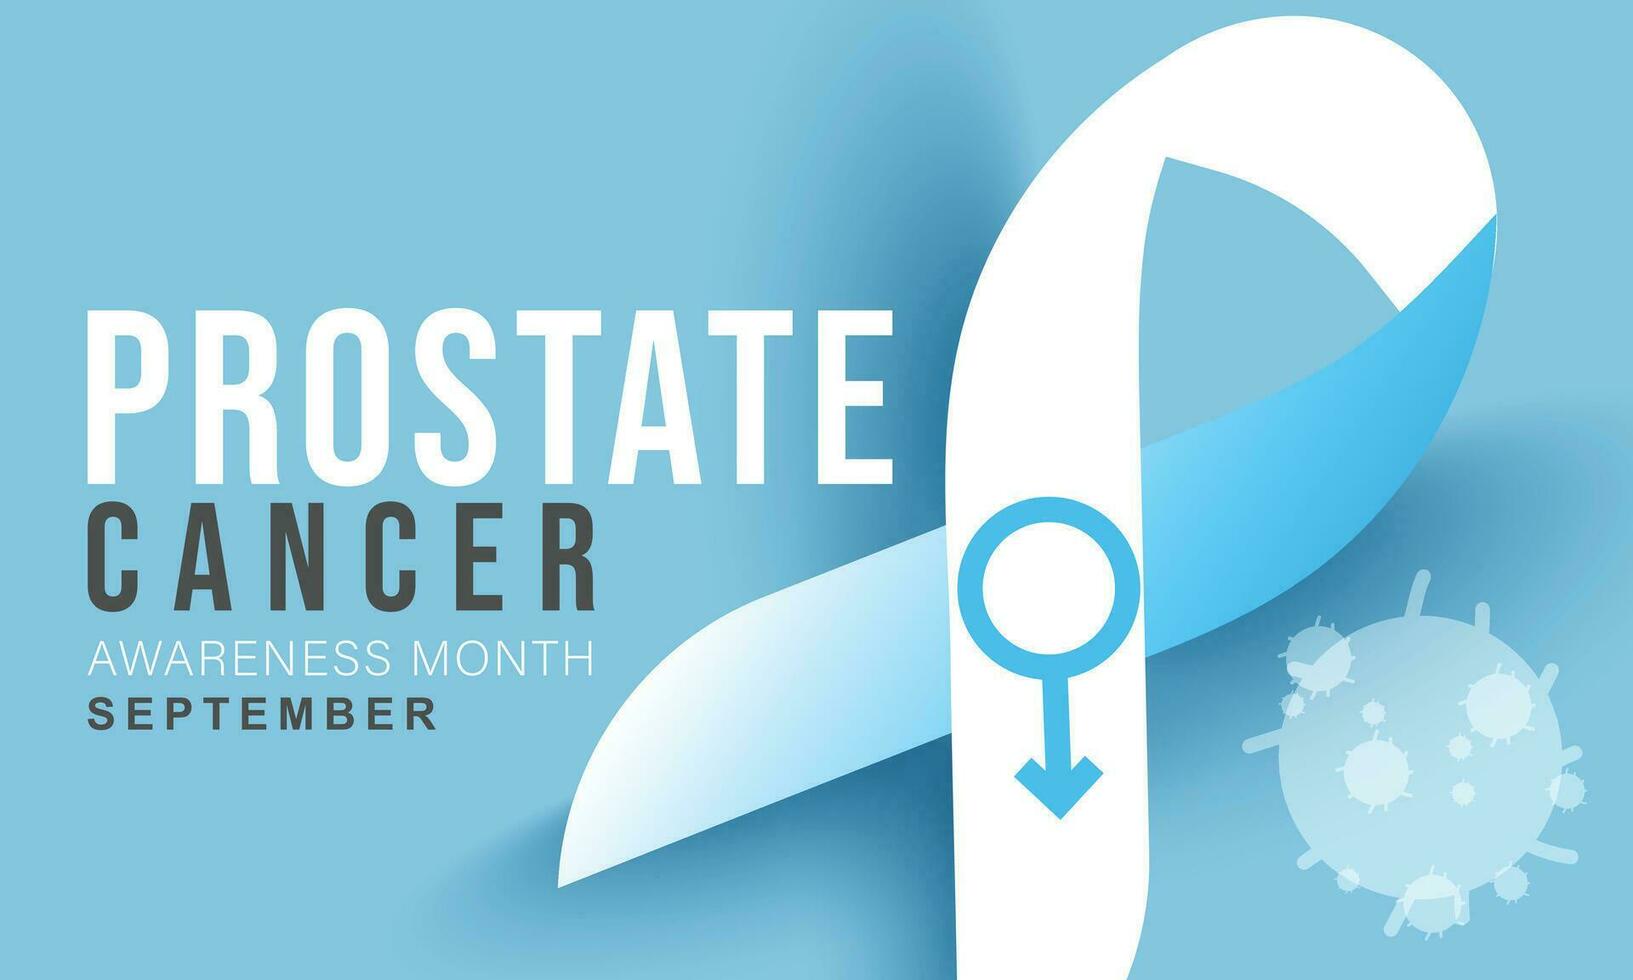 próstata cáncer conciencia mes. fondo, bandera, tarjeta, póster, modelo. vector ilustración.